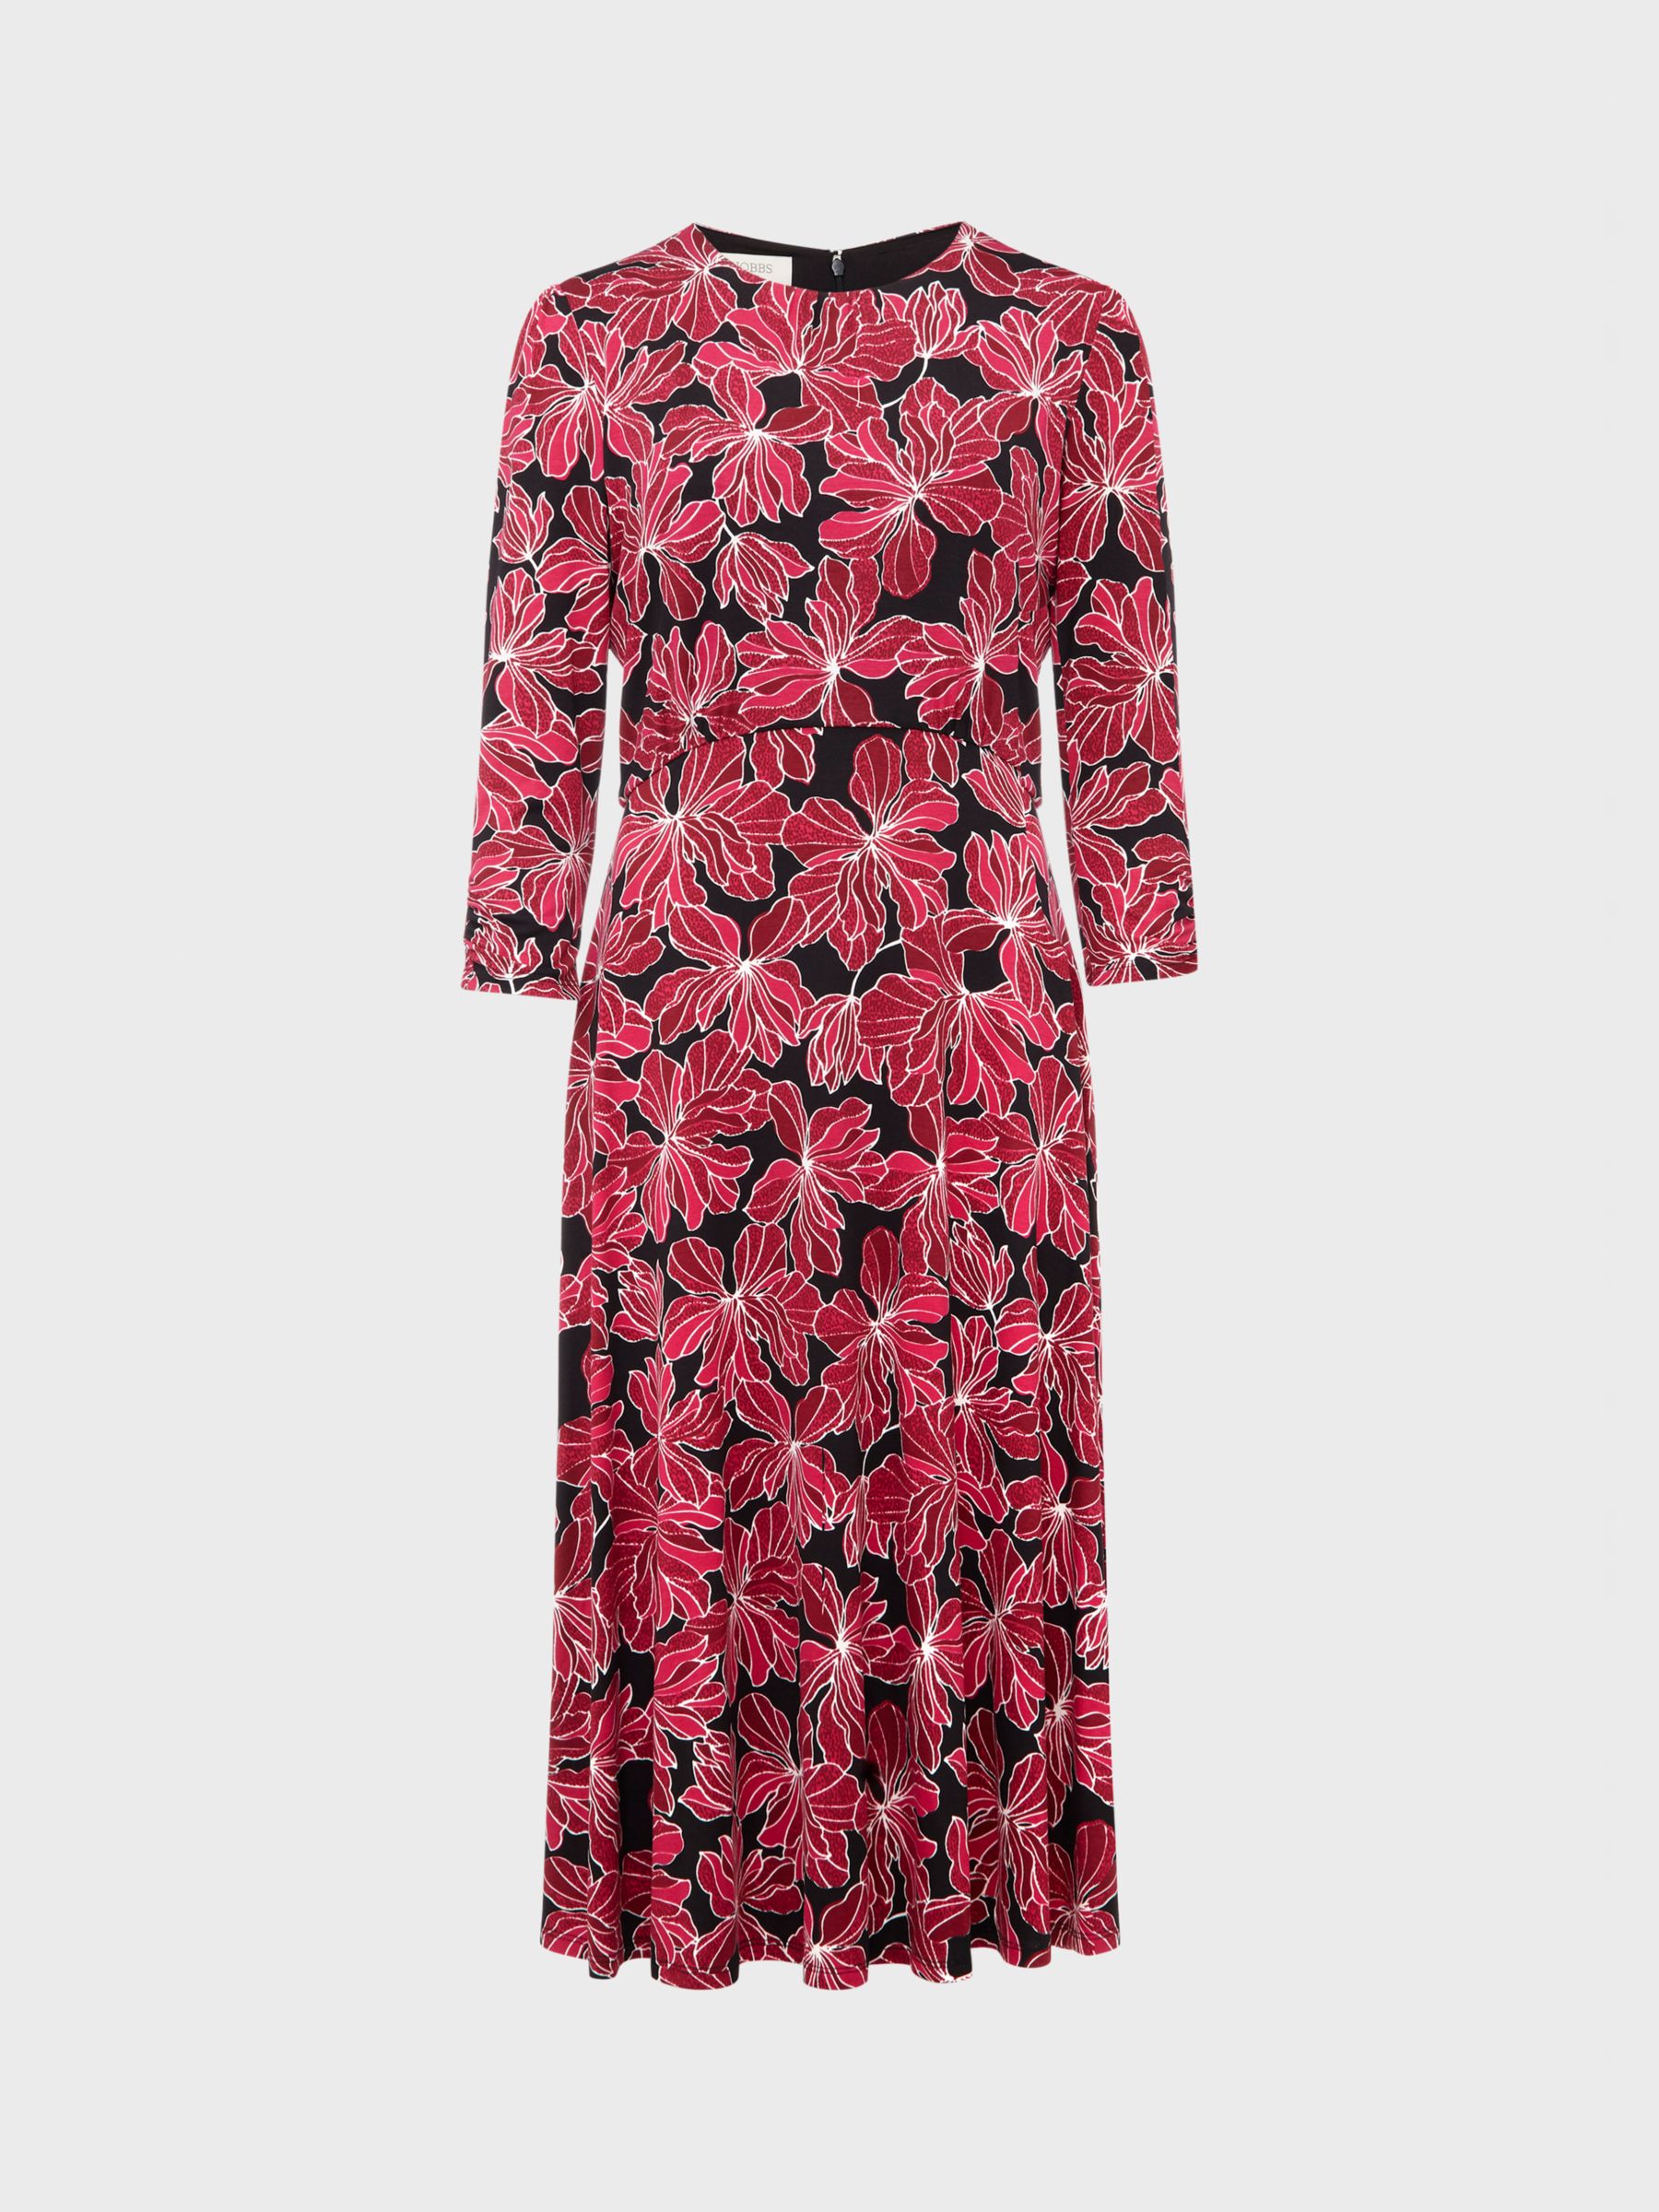 Hobbs Mabel Floral Jersey Dress, Black/Pink at John Lewis & Partners